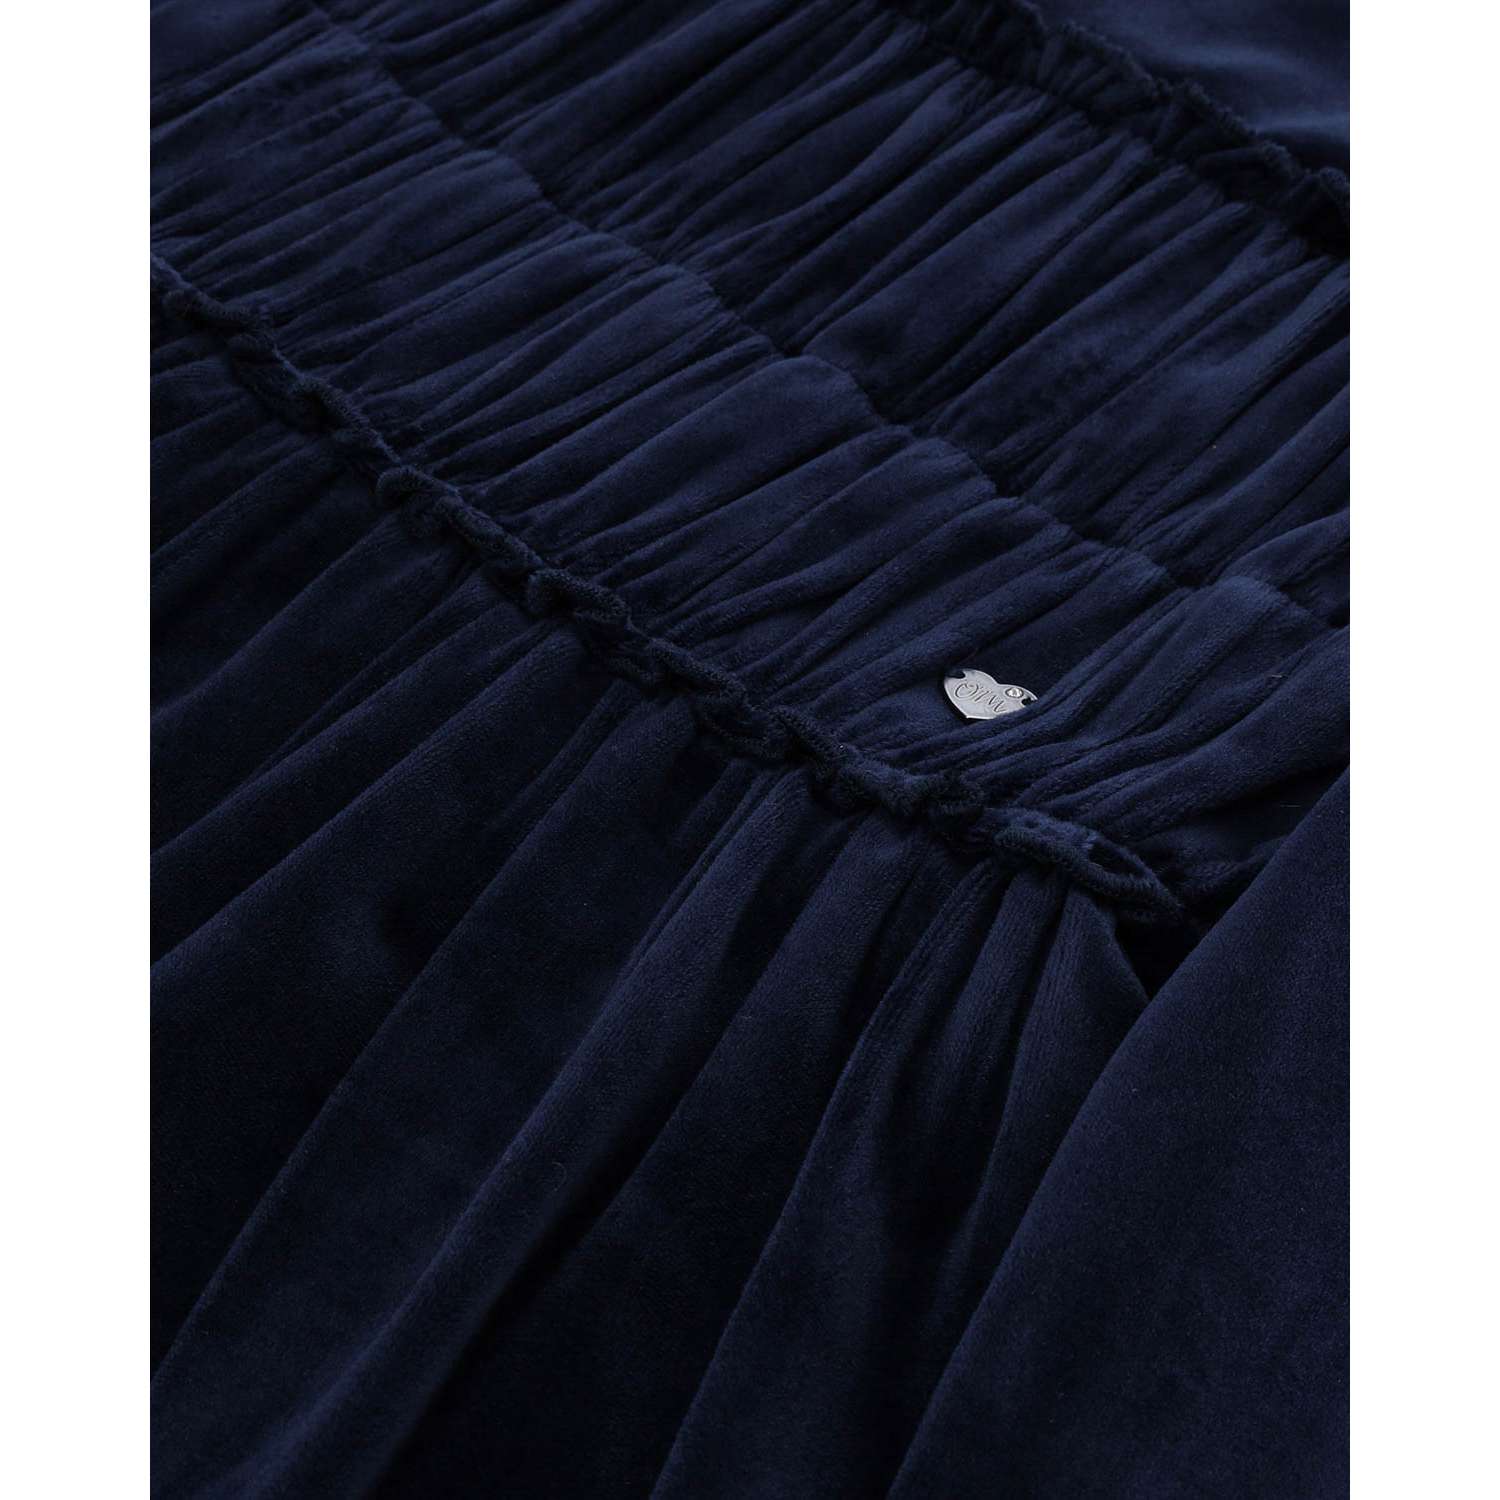 Платье ORIGINAL MARINES AZA3767F1_BLUE - фото 2